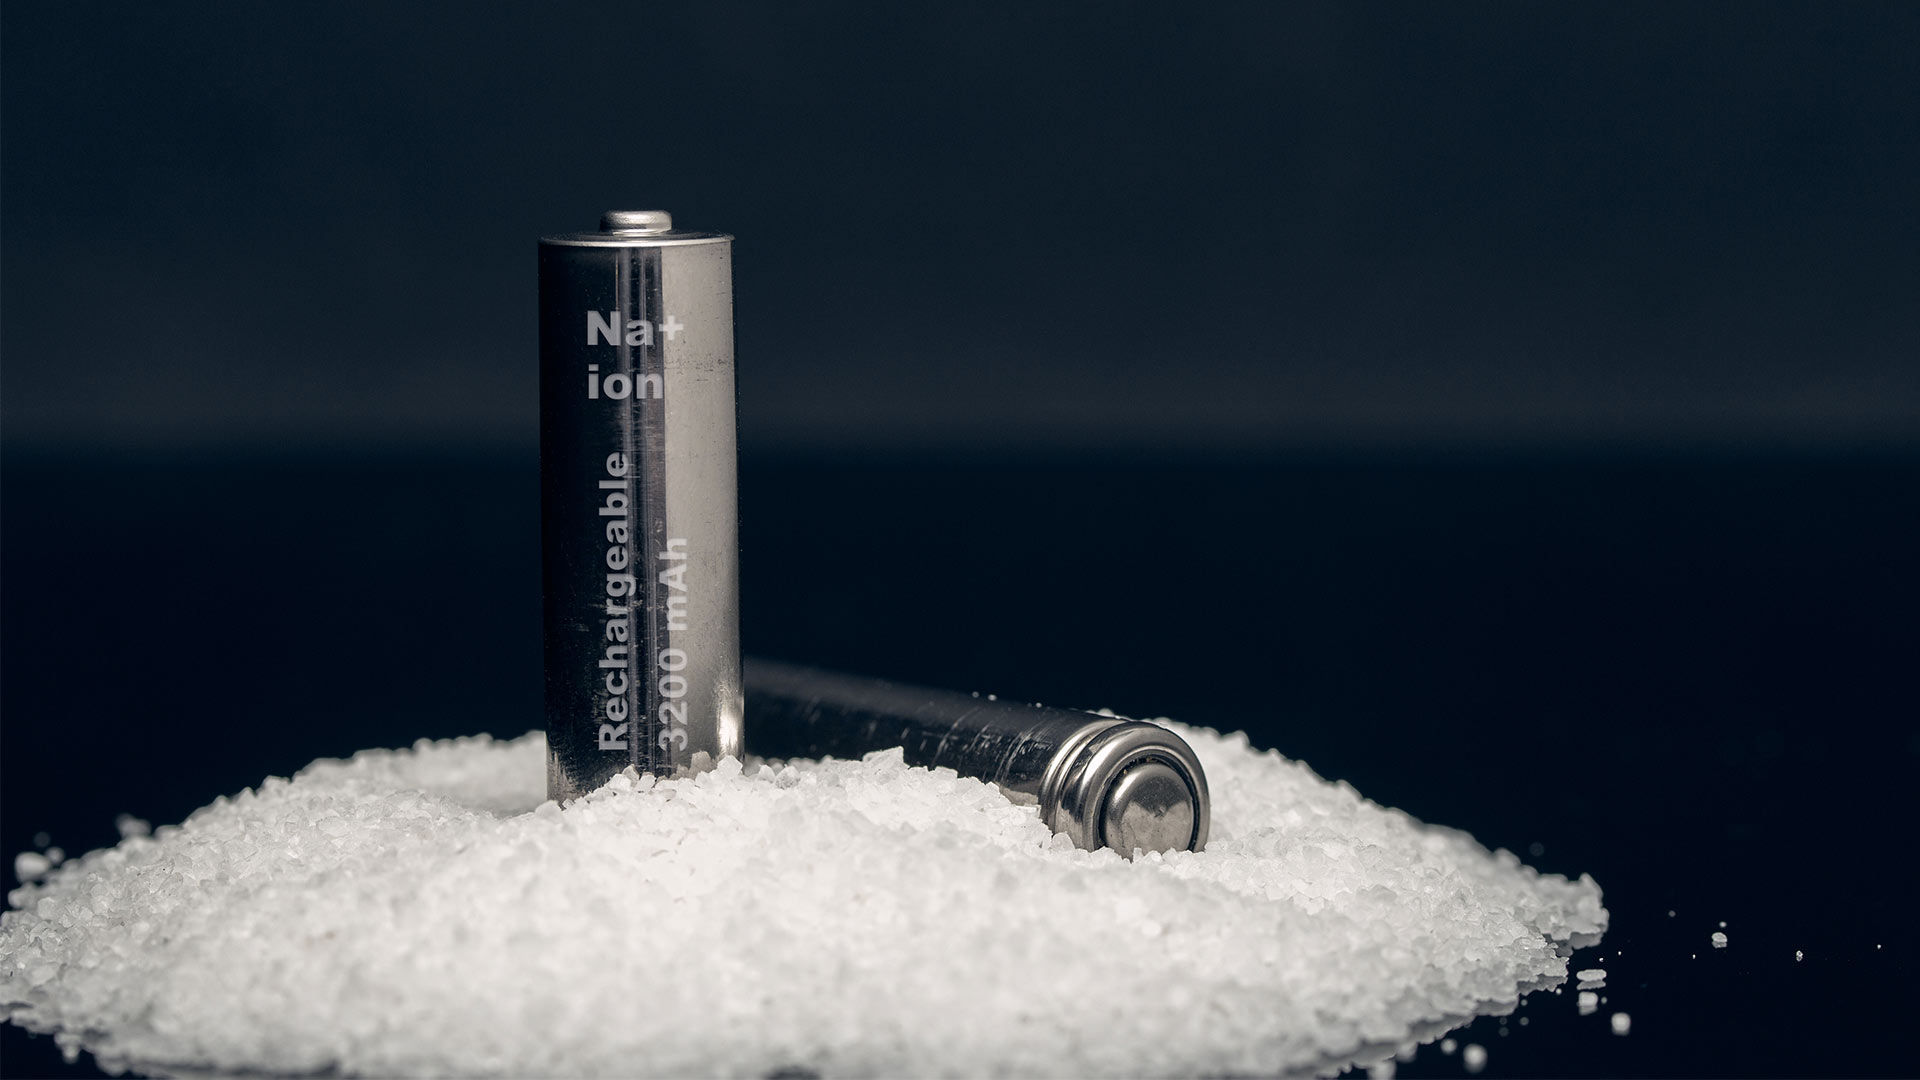 Sodium and Boron Batteries